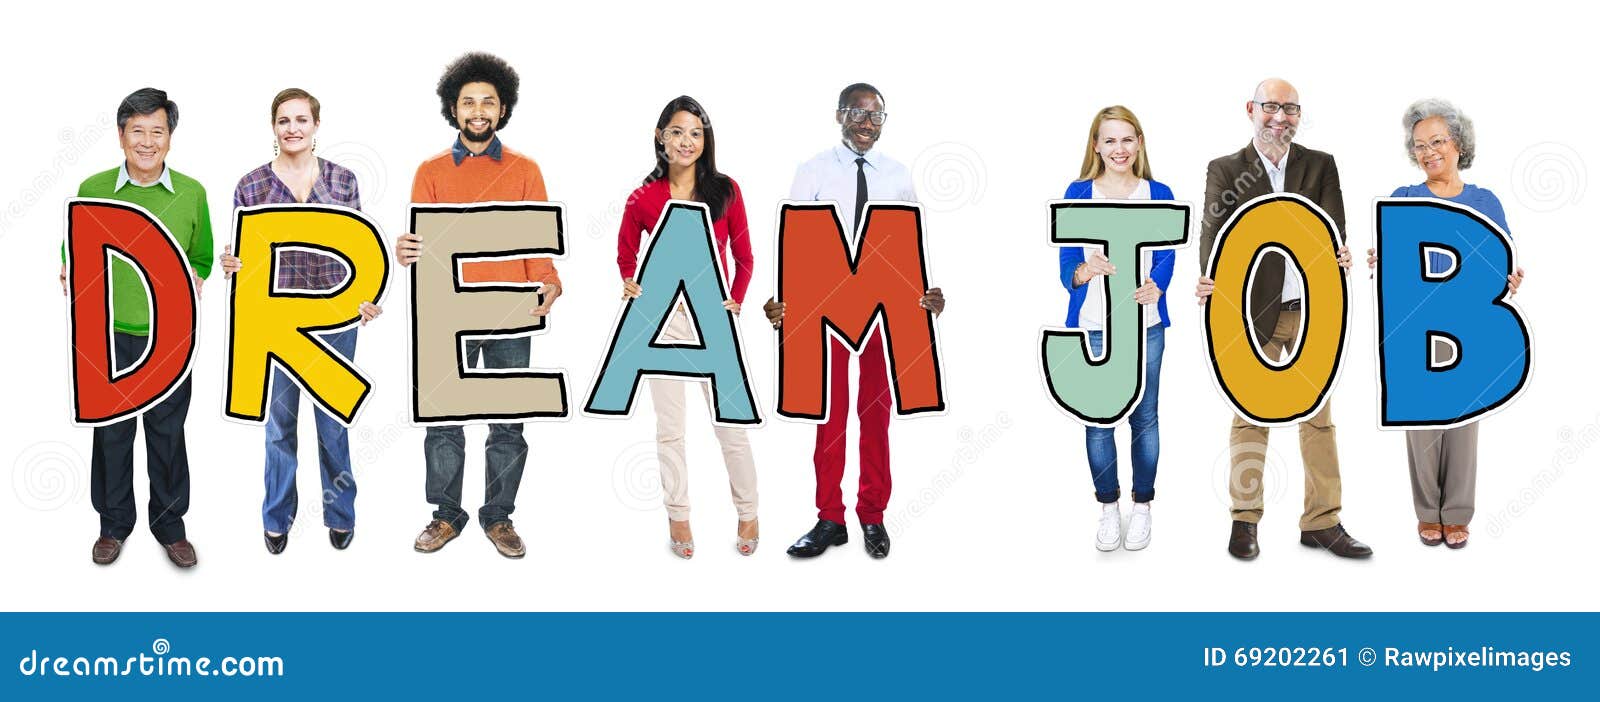 multiethnic group of people holding dream job